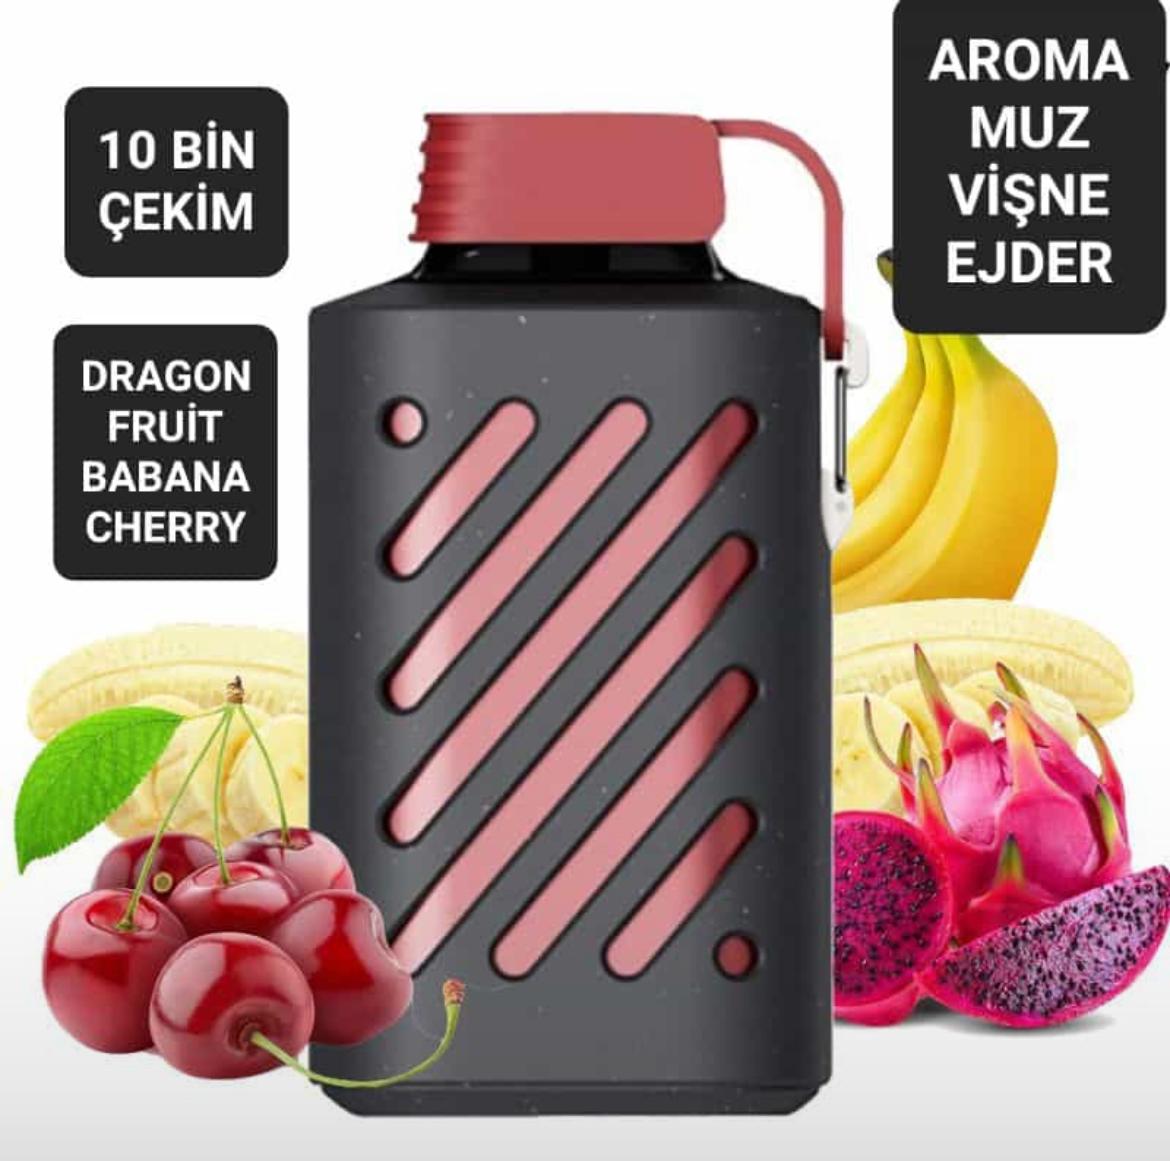 Vozol Gear 10000 Dragon Fruit Banana Cherry - Dijital Sigara